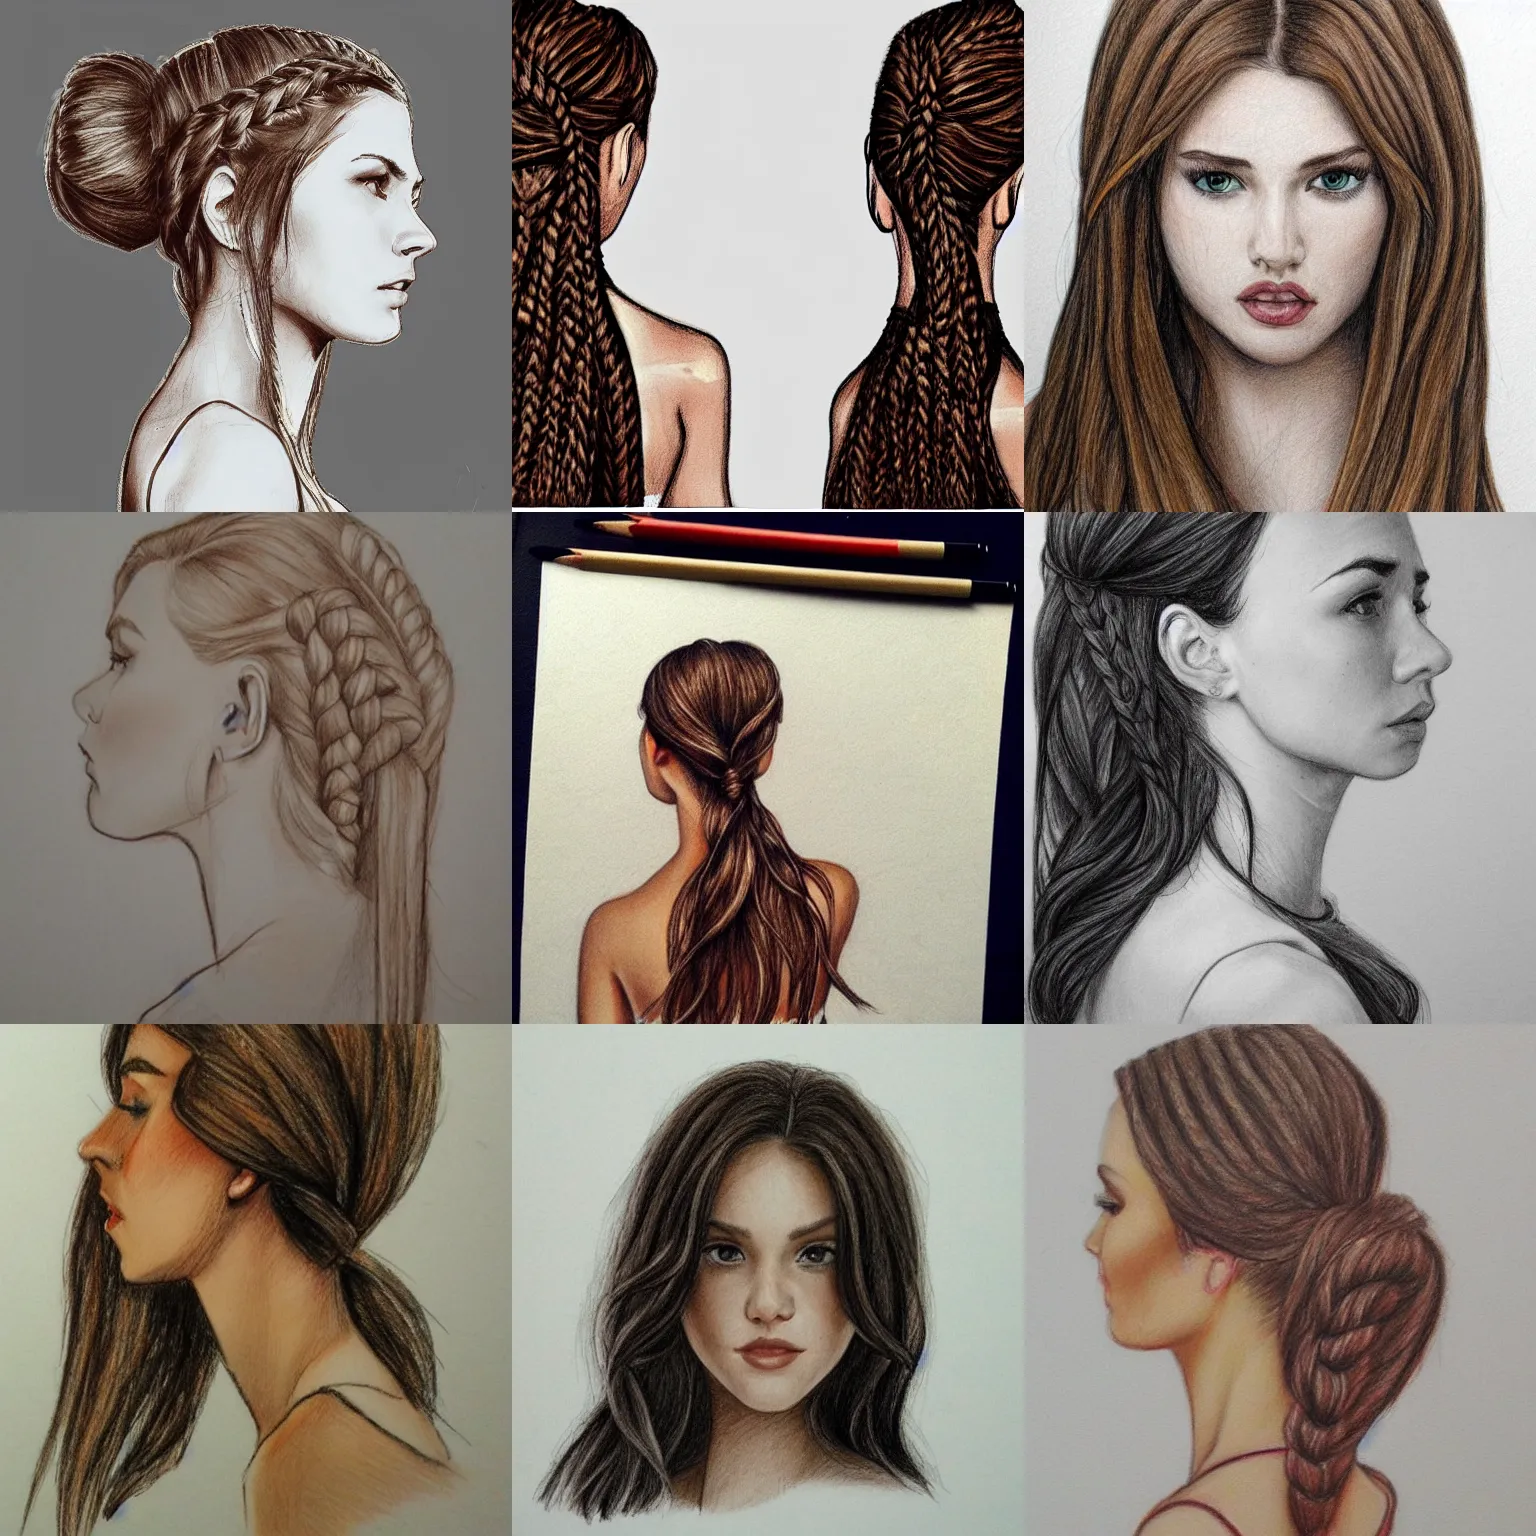 Prompt: woman girl plait hair back of head behind portrait brunette pencil drawing artstation, open back dress